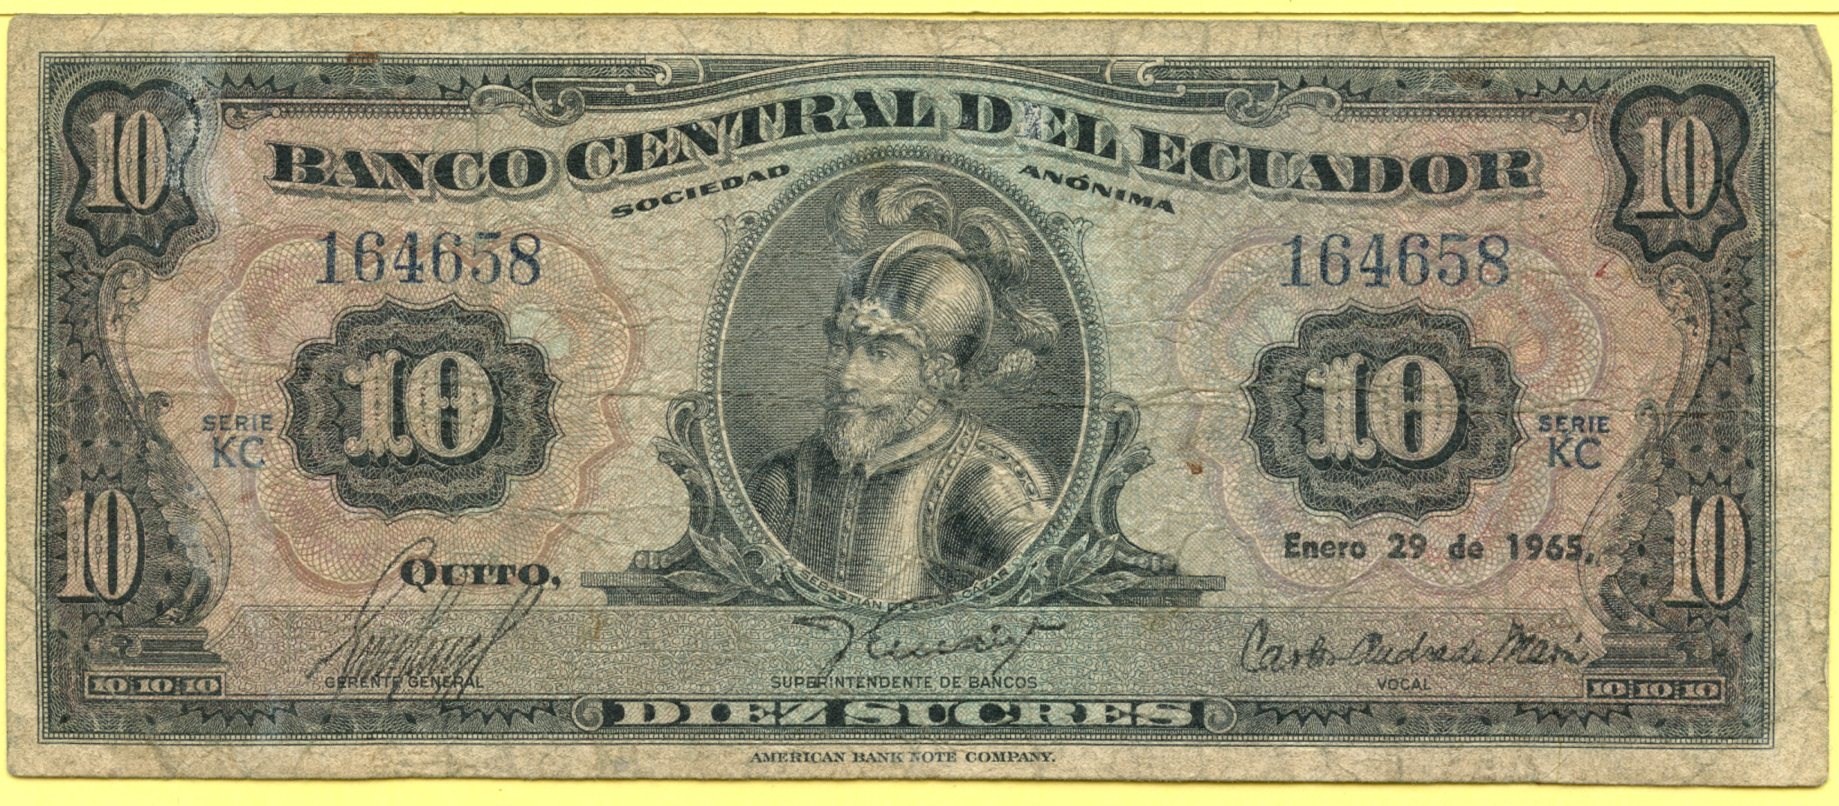 T me banknotes. Старые банкноты Эквадора. Эквадор банкнота 5000 сукре 1999. Эквадор банкнота 100 сукре 1994. Банкнота 10 сукре 1988.